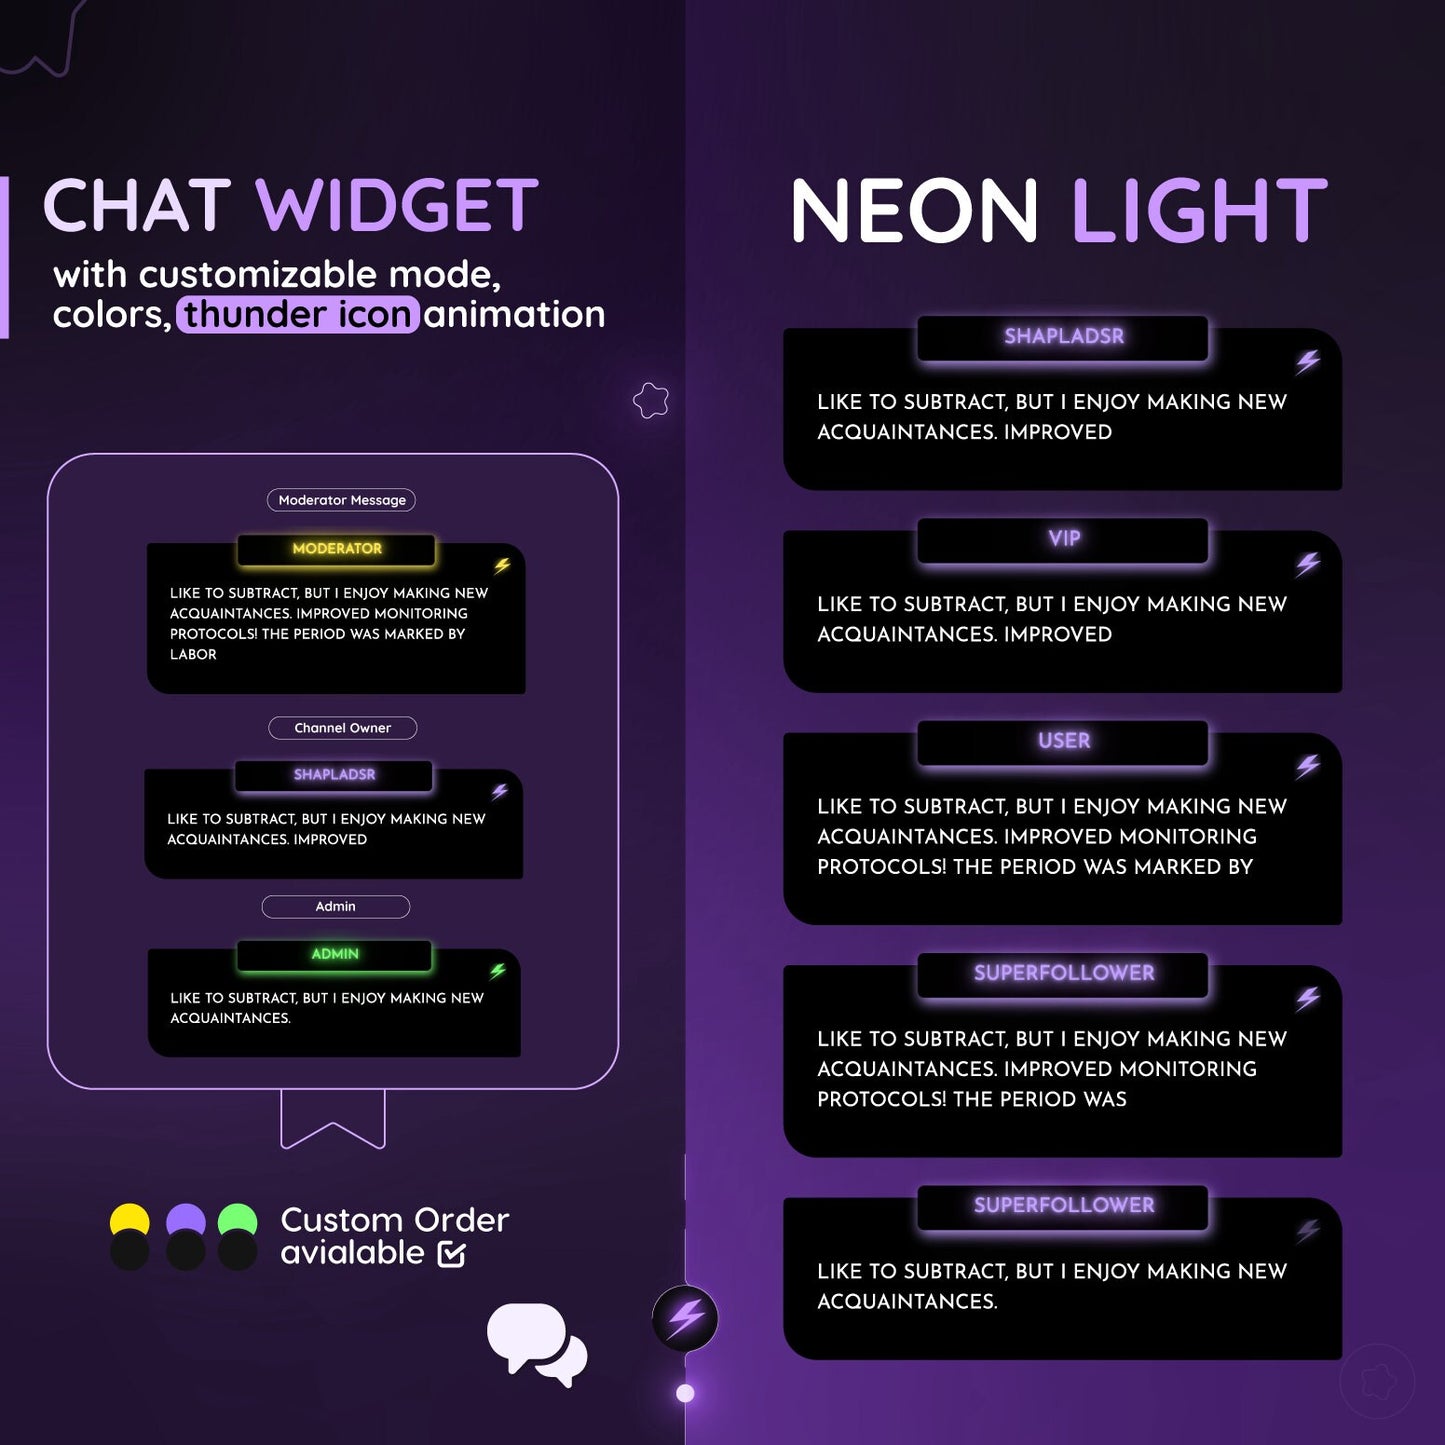 Purple Neon Light COD Twitch chat widget